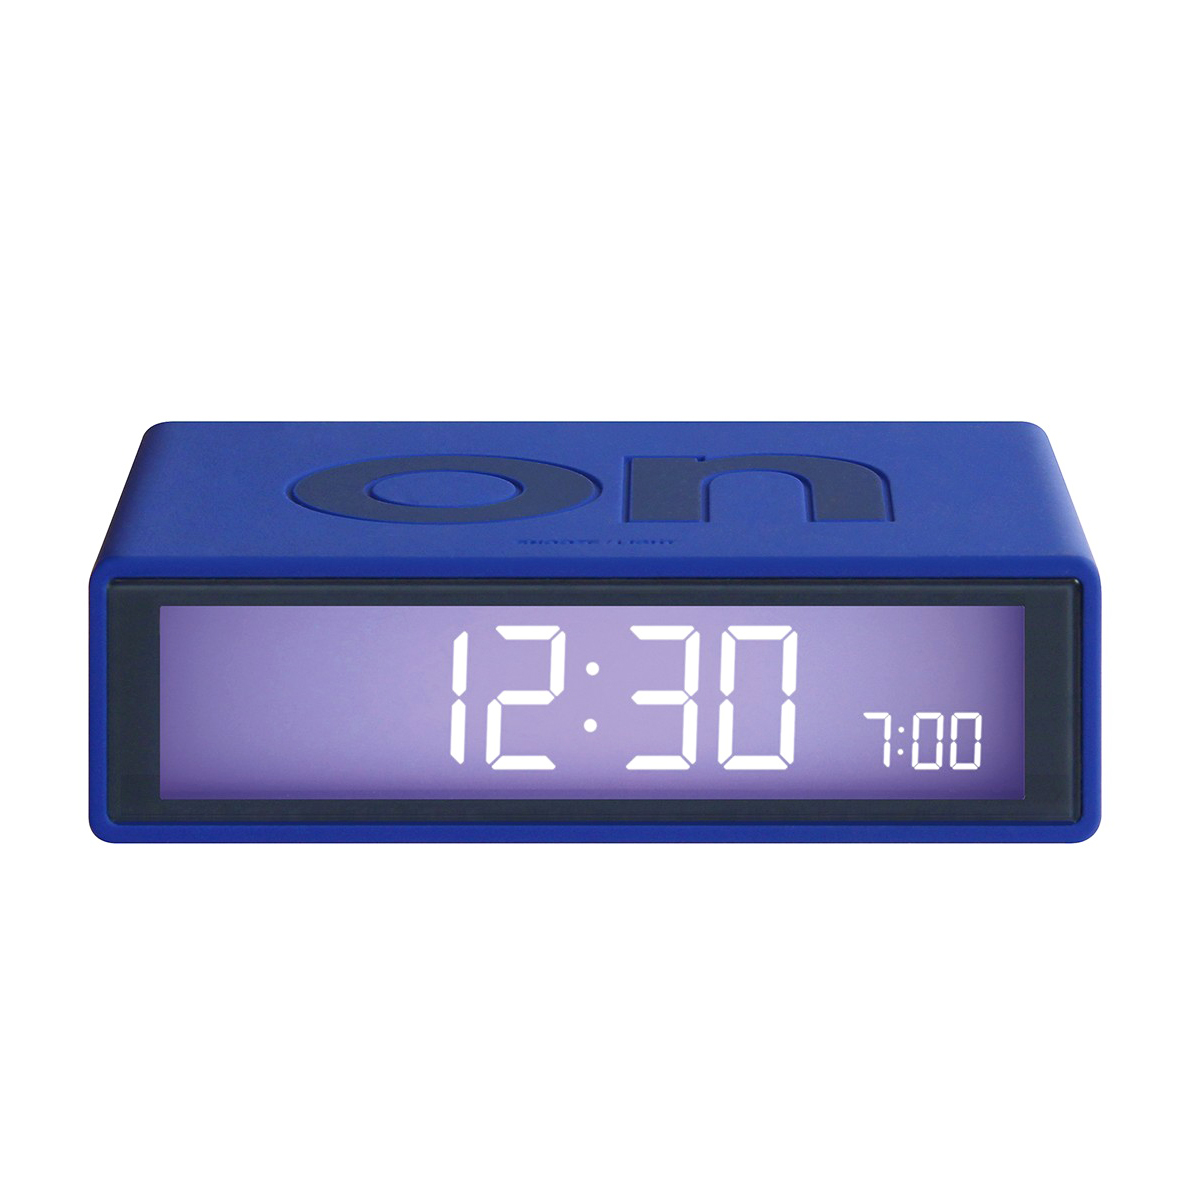 LEXON Flip LCD alarm clock LR130B6 blue | the design gift shop